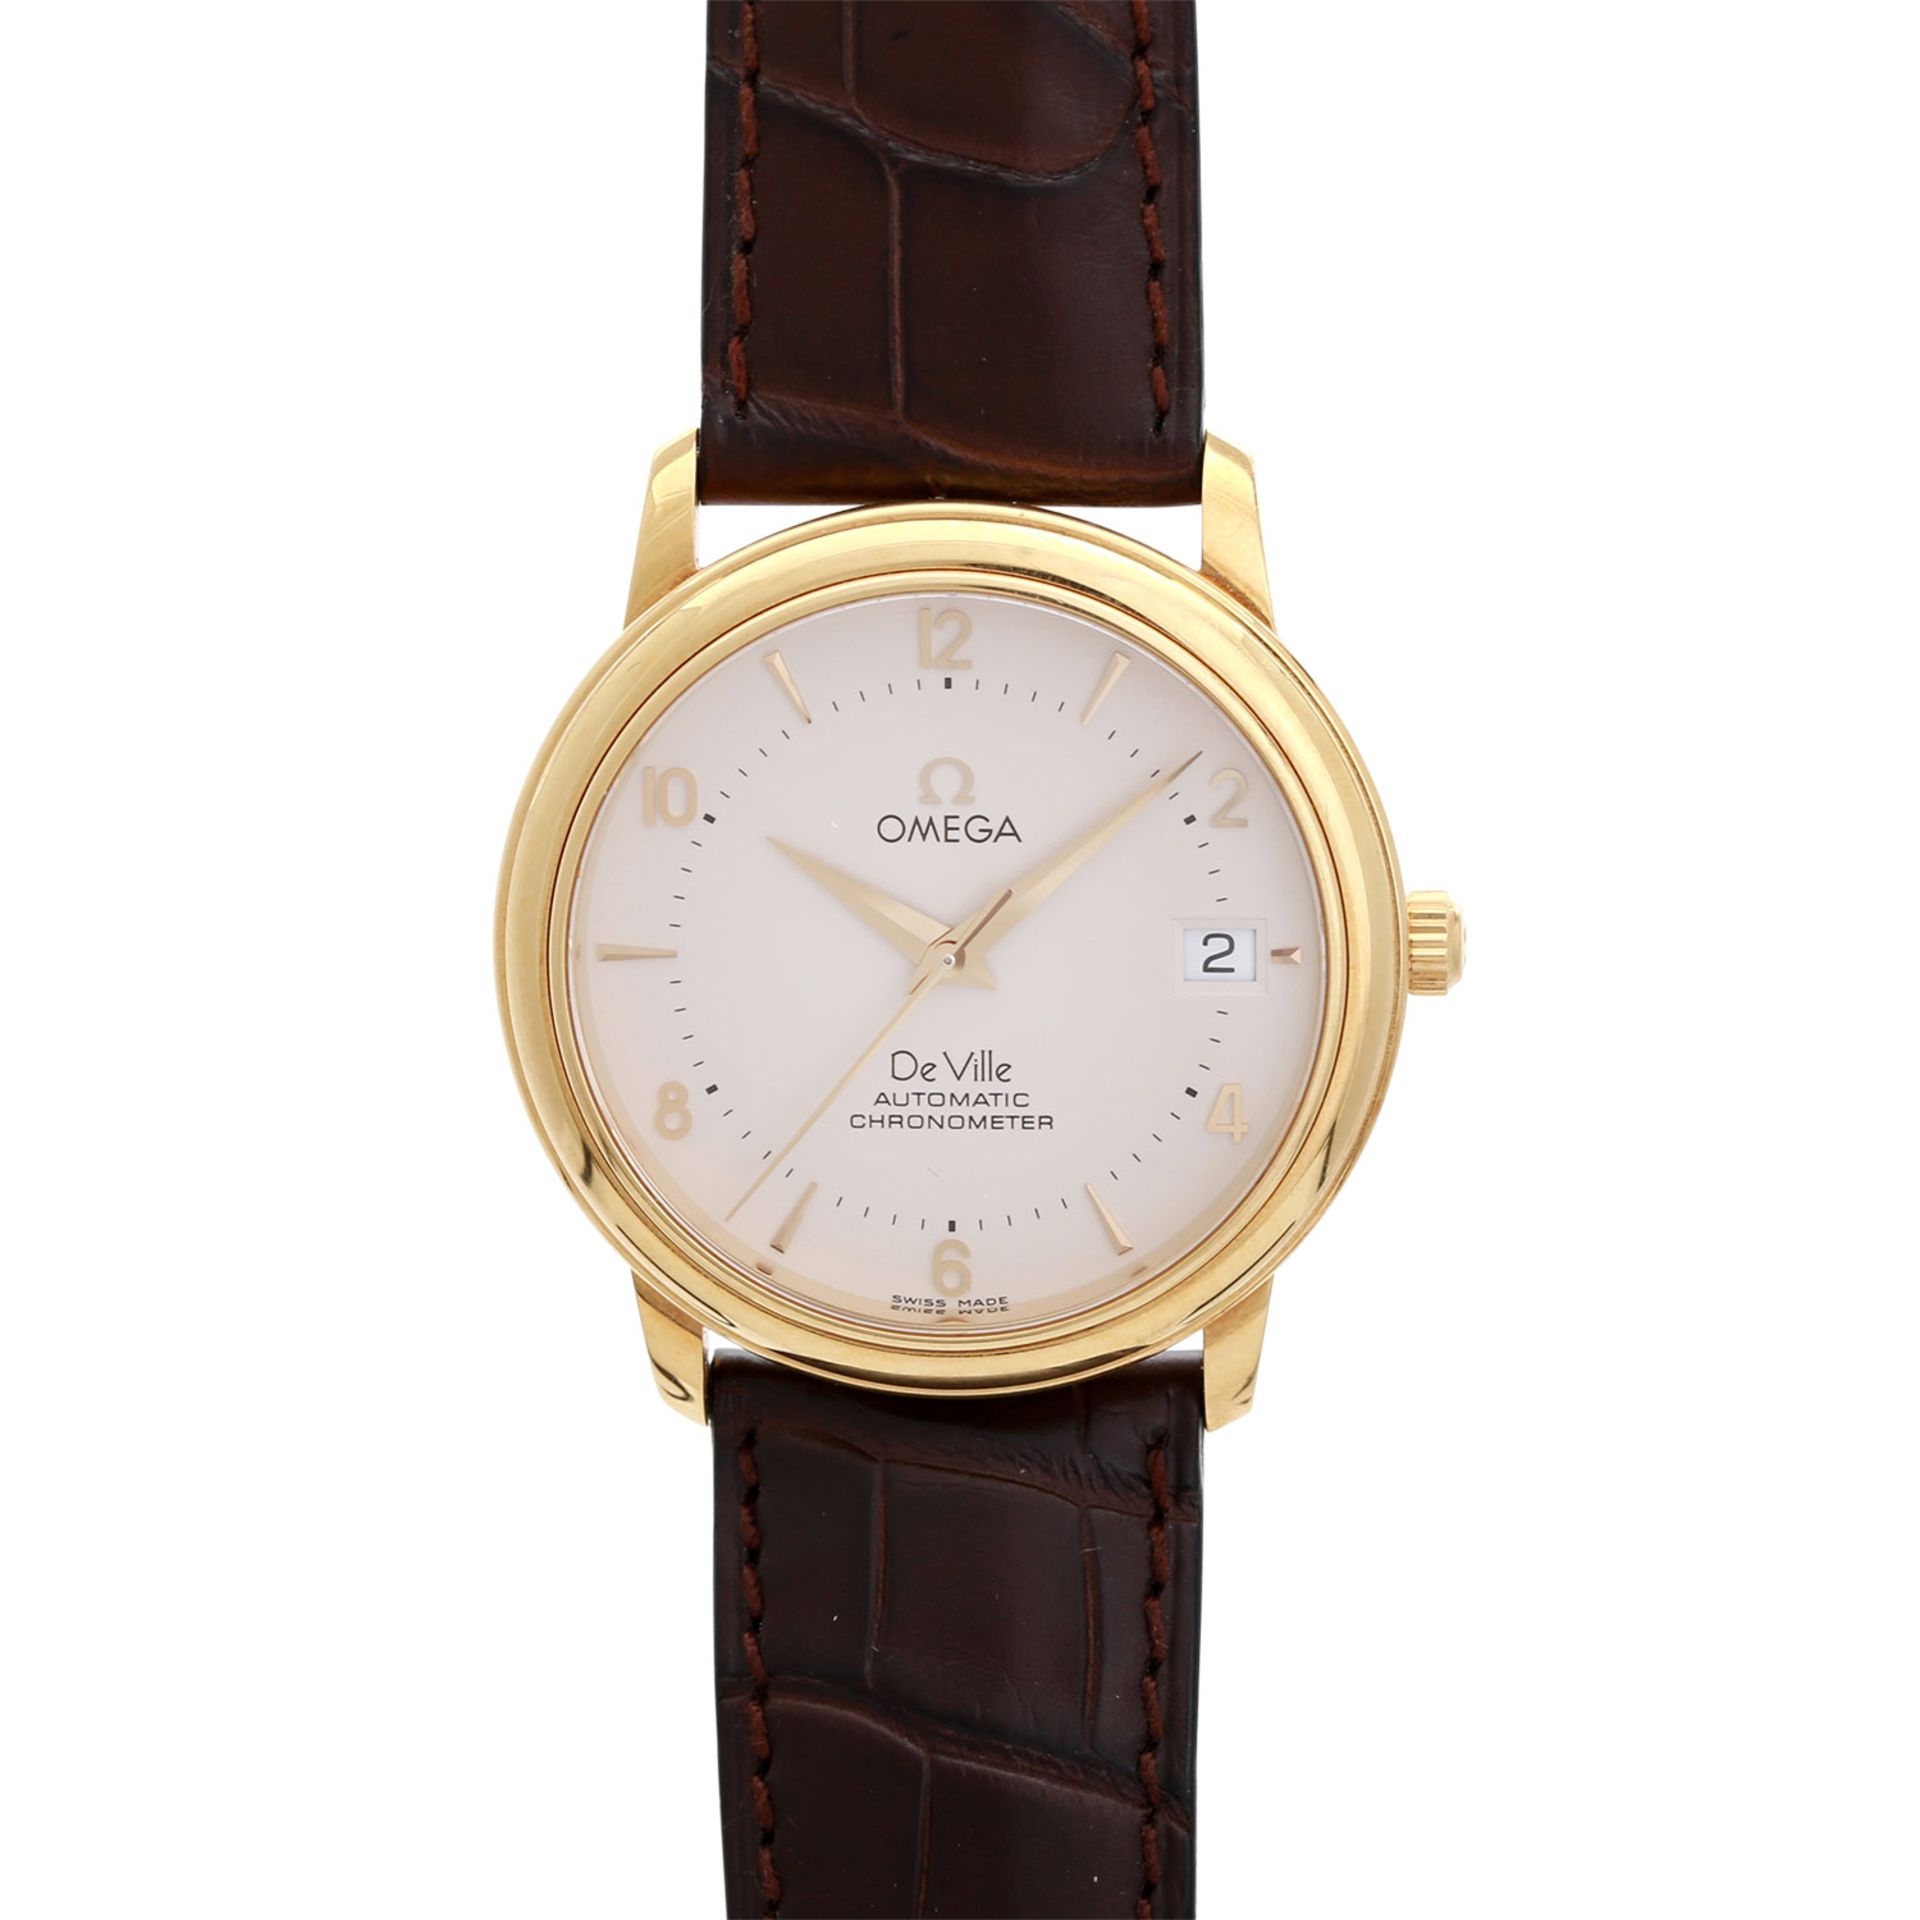 OMEGA De Ville "Dresswatch" Armbanduhr, Ref. 168.1050, ca. 1990/2000er Jahre. Gold 18K. Automatic-